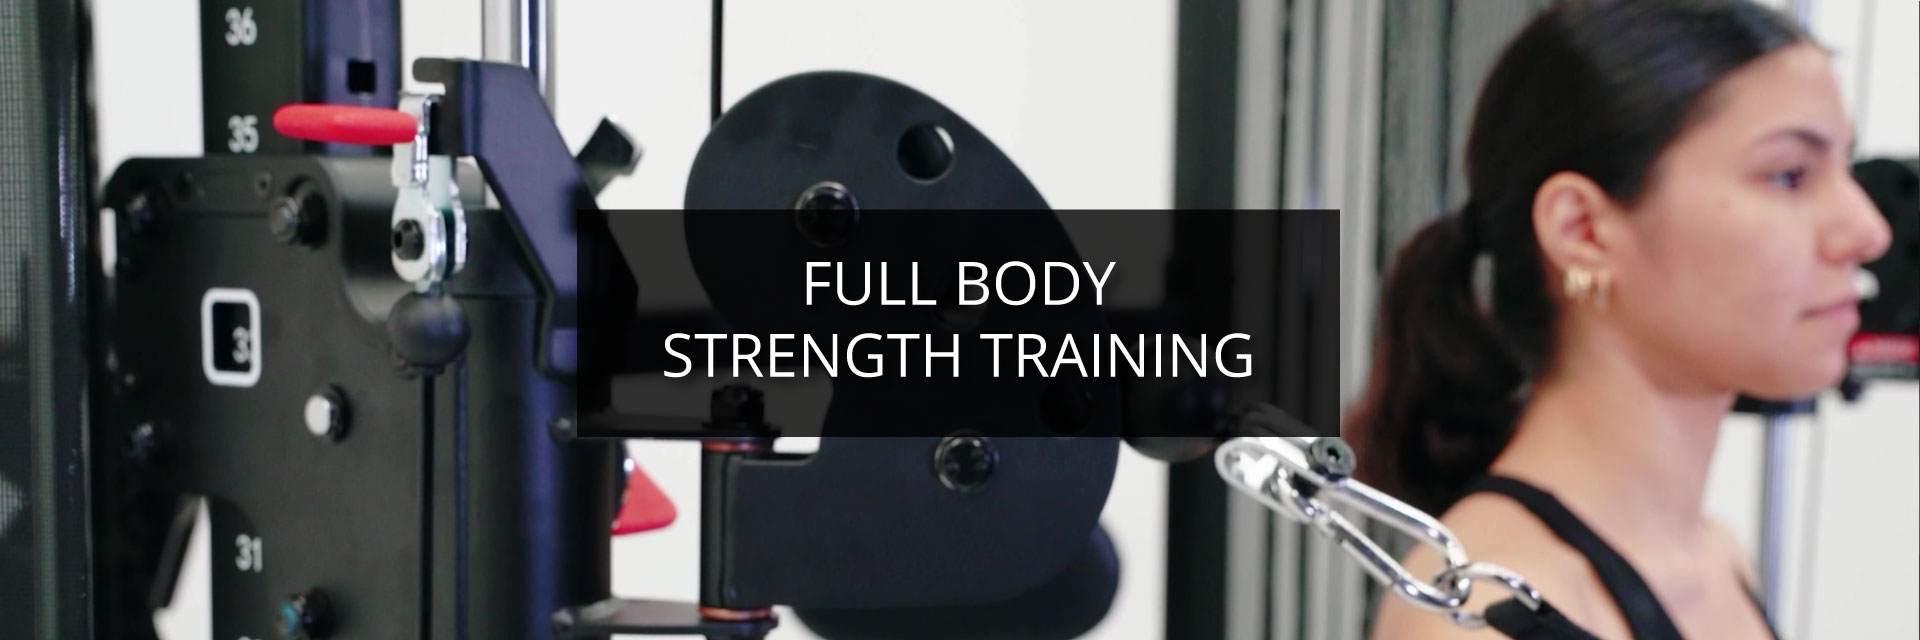 Full Body Strenght Training